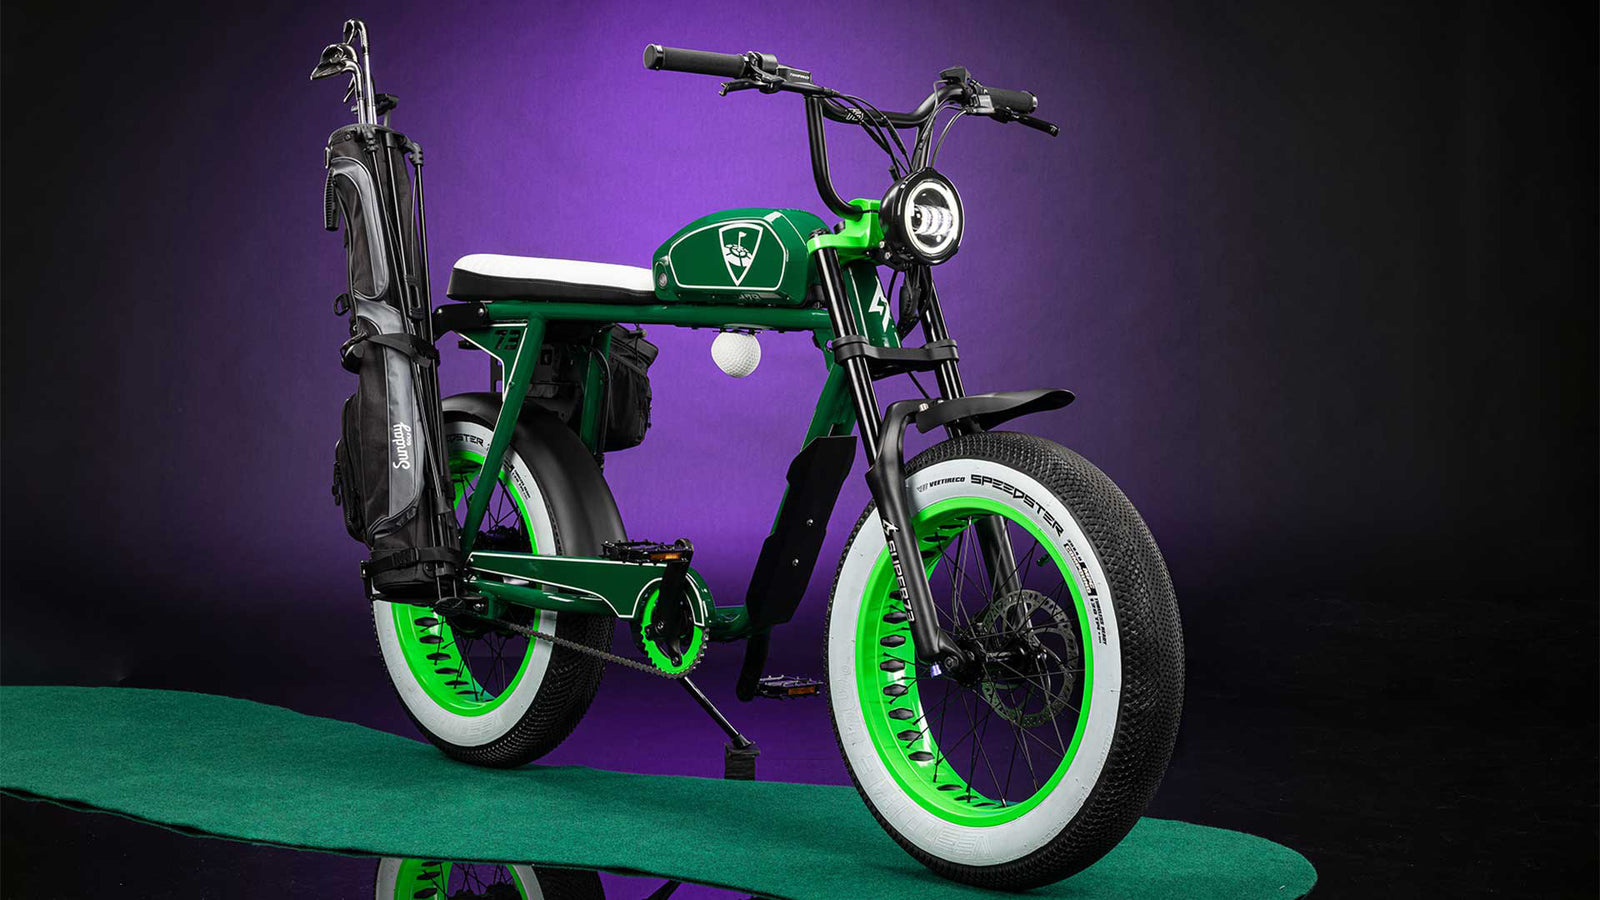 HALO custom Top Golf bike with purple backdrop